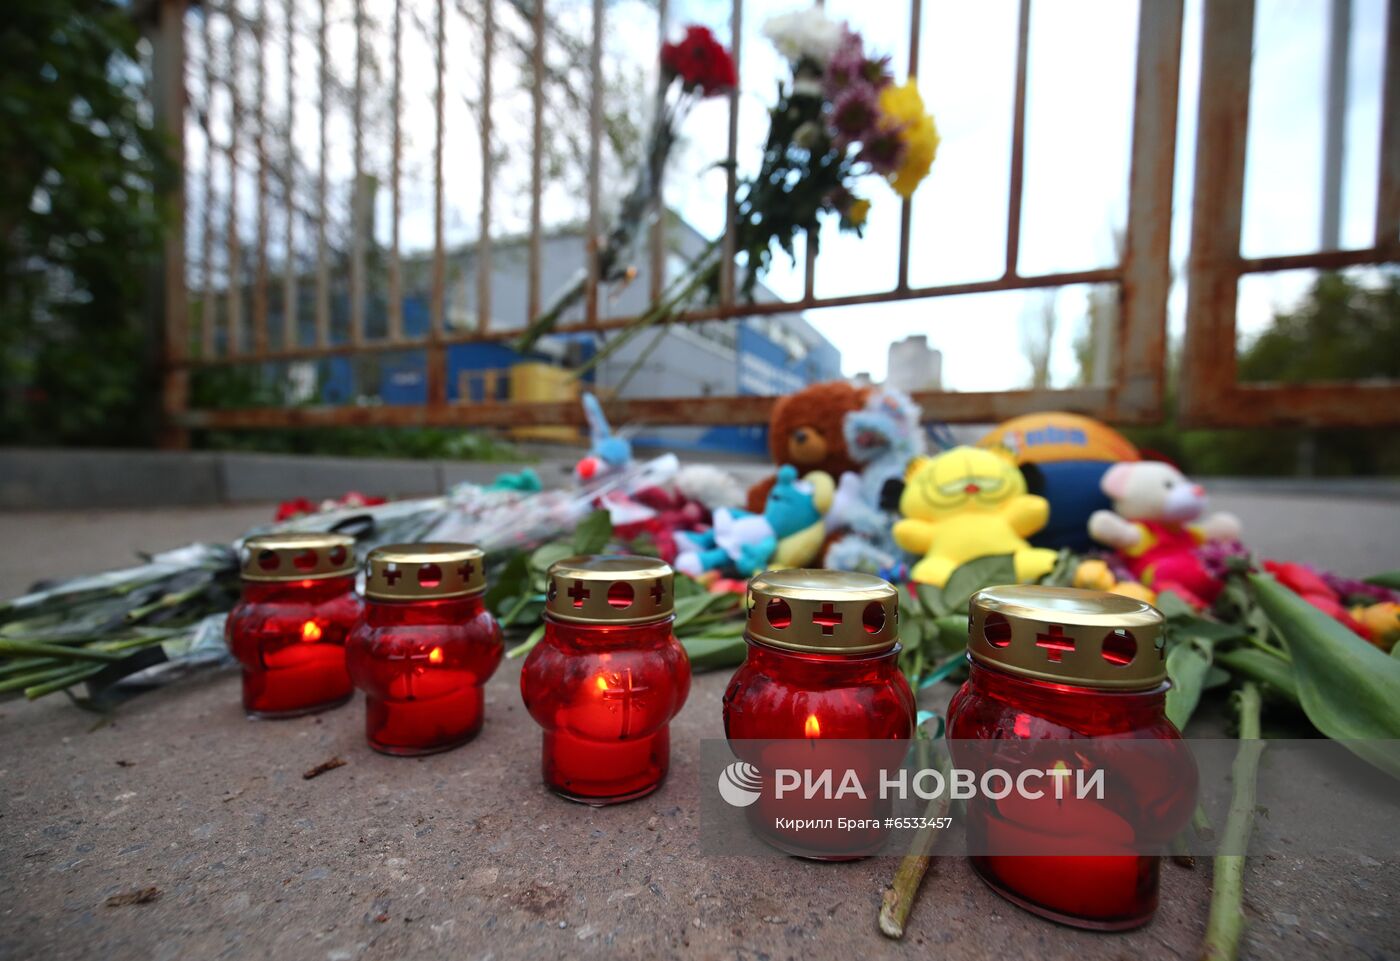 В Волгограде объявлен траур по погибшим в ДТП в Ставрополье